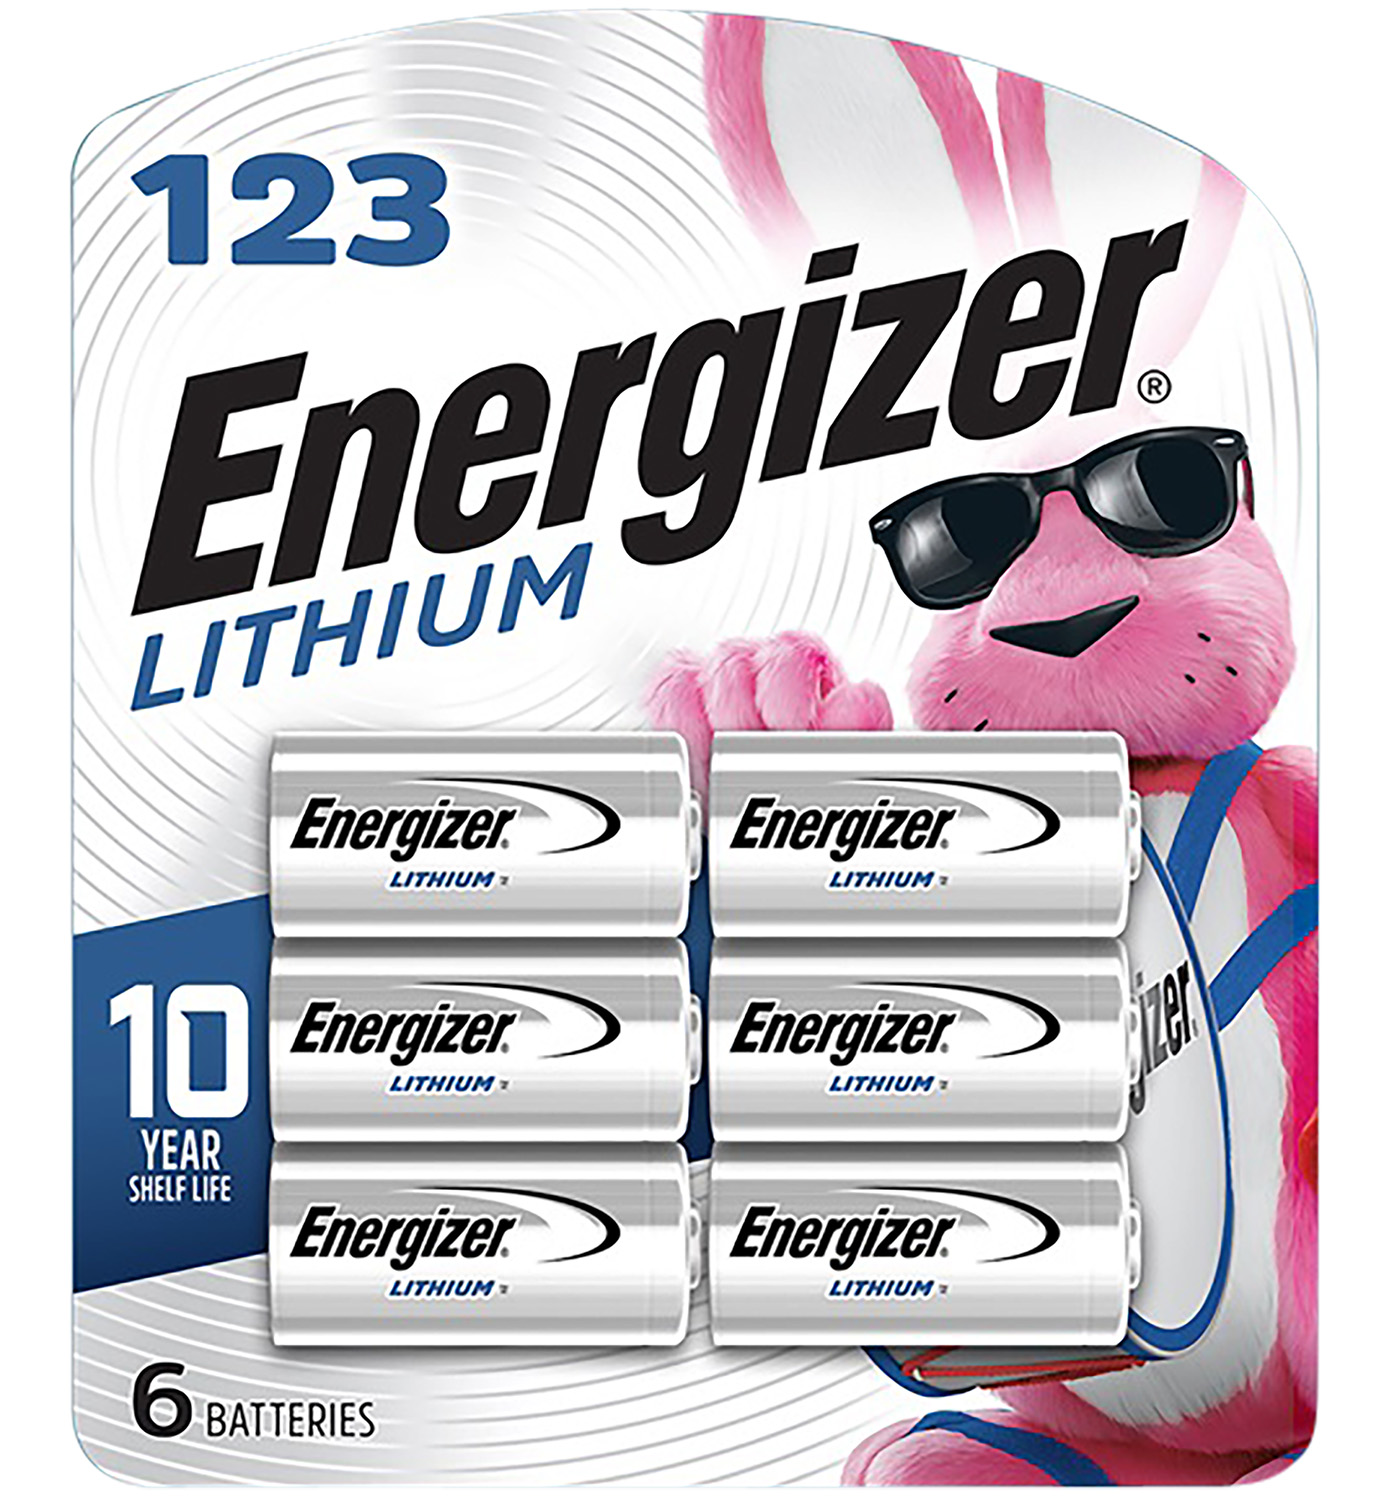 Energizer EL123BP6 123 Lithium Battery Lithium 3.0 Volt, Qty (24) 6 Pack-img-0